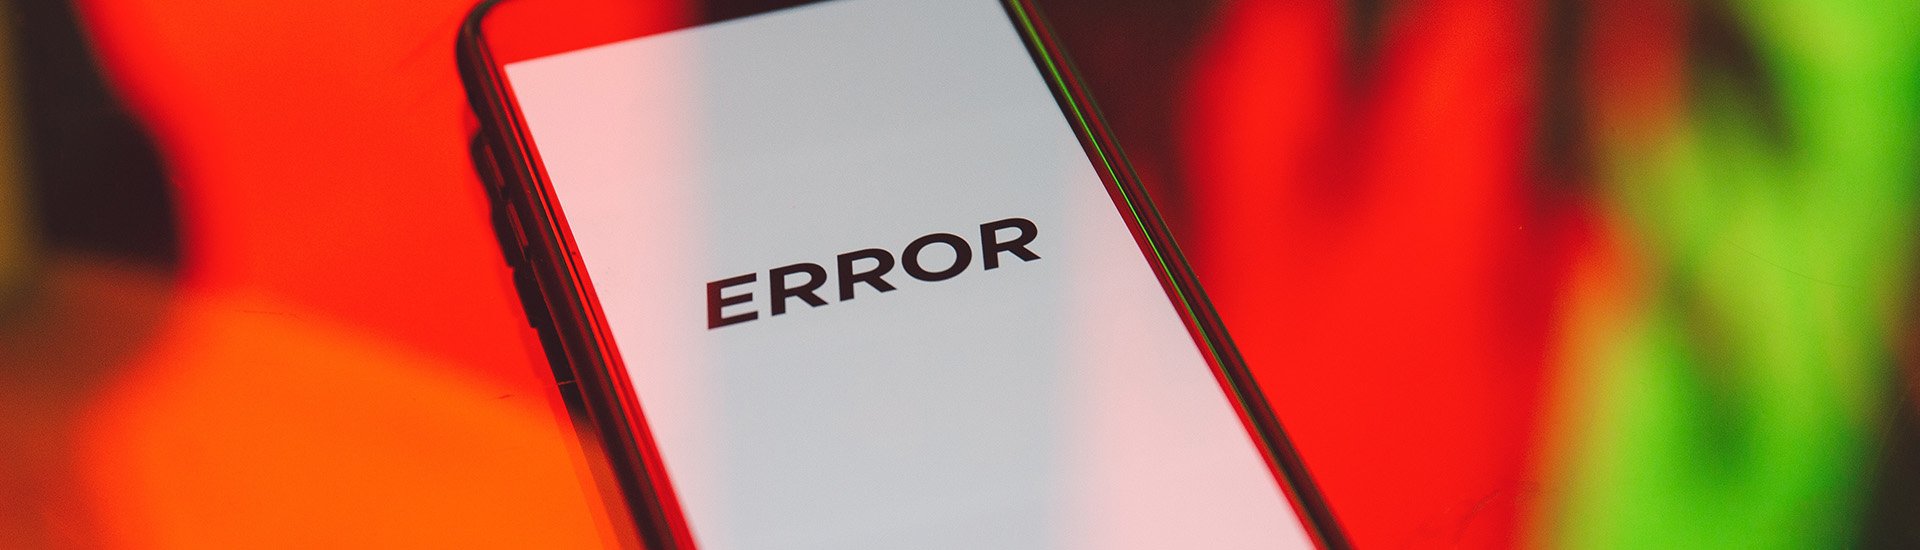 error-message-on-phone